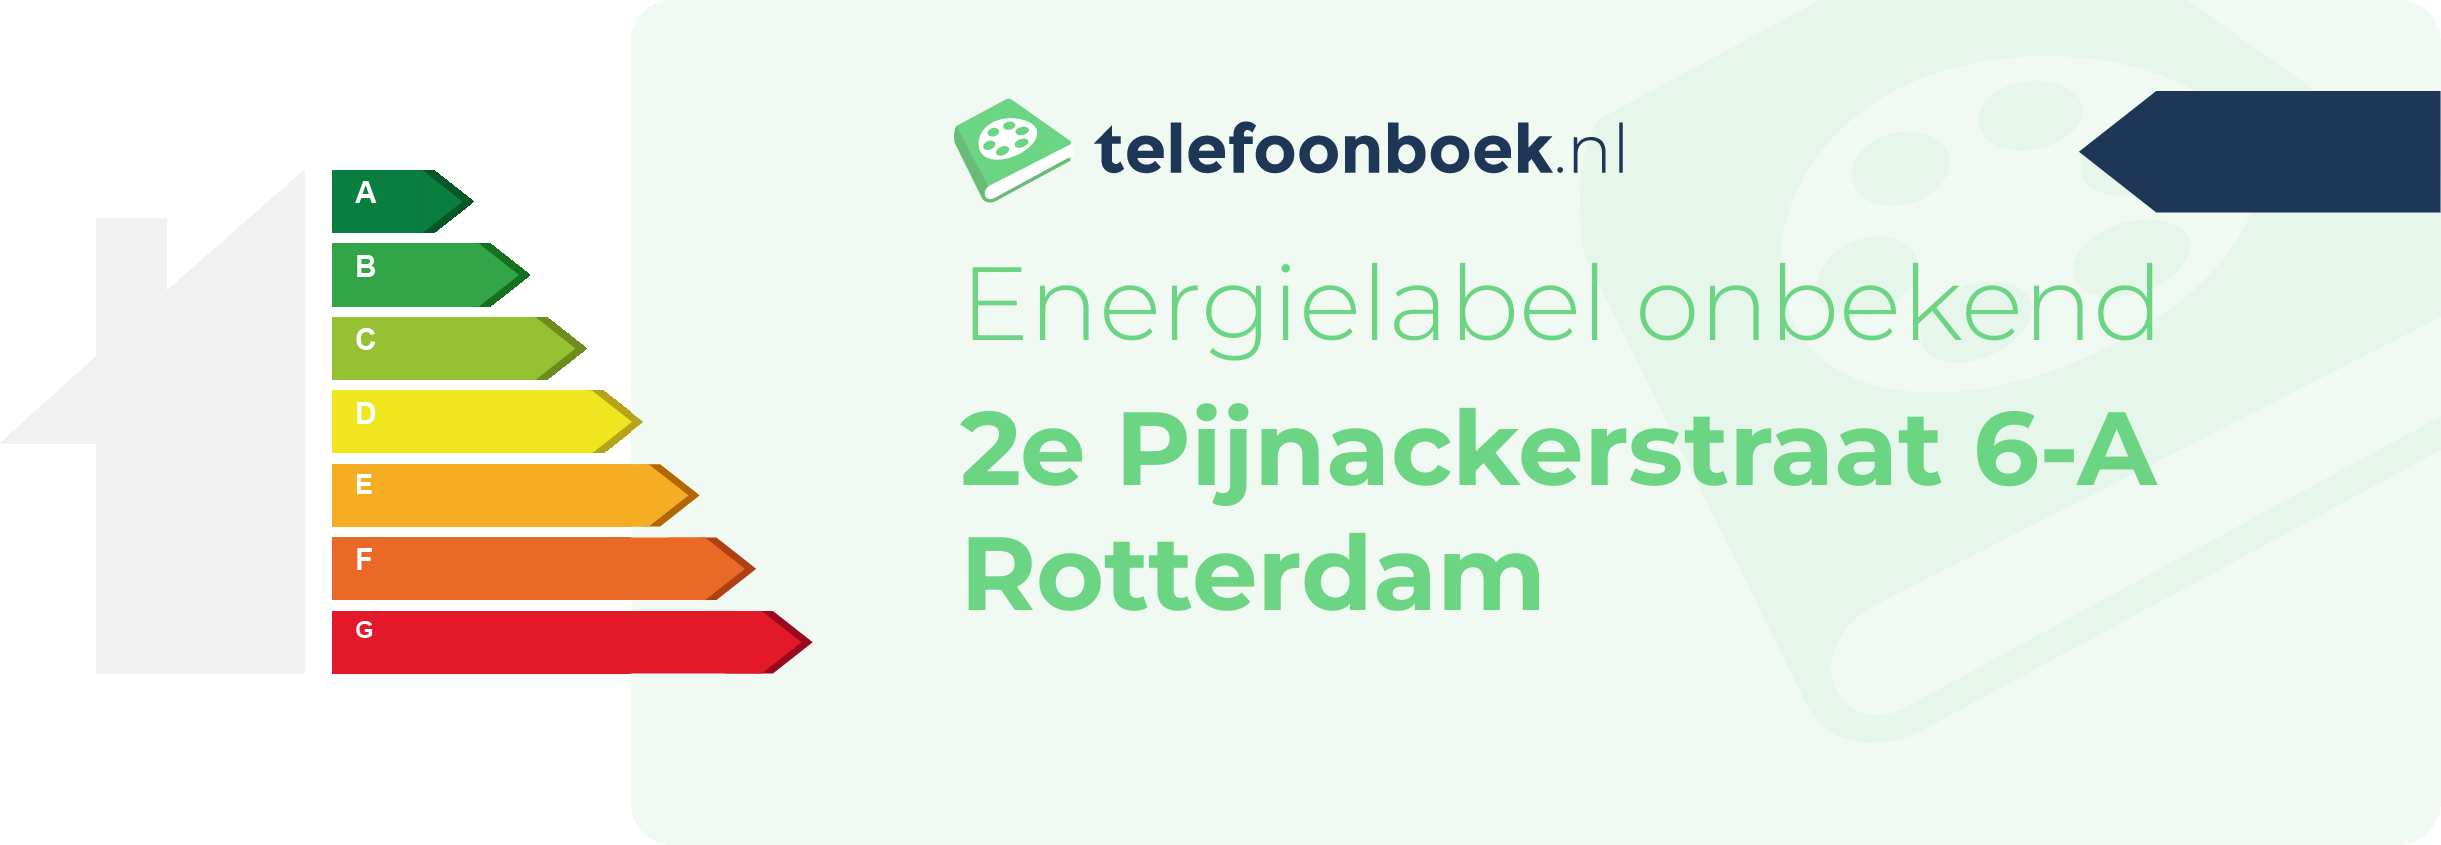 Energielabel 2e Pijnackerstraat 6-A Rotterdam